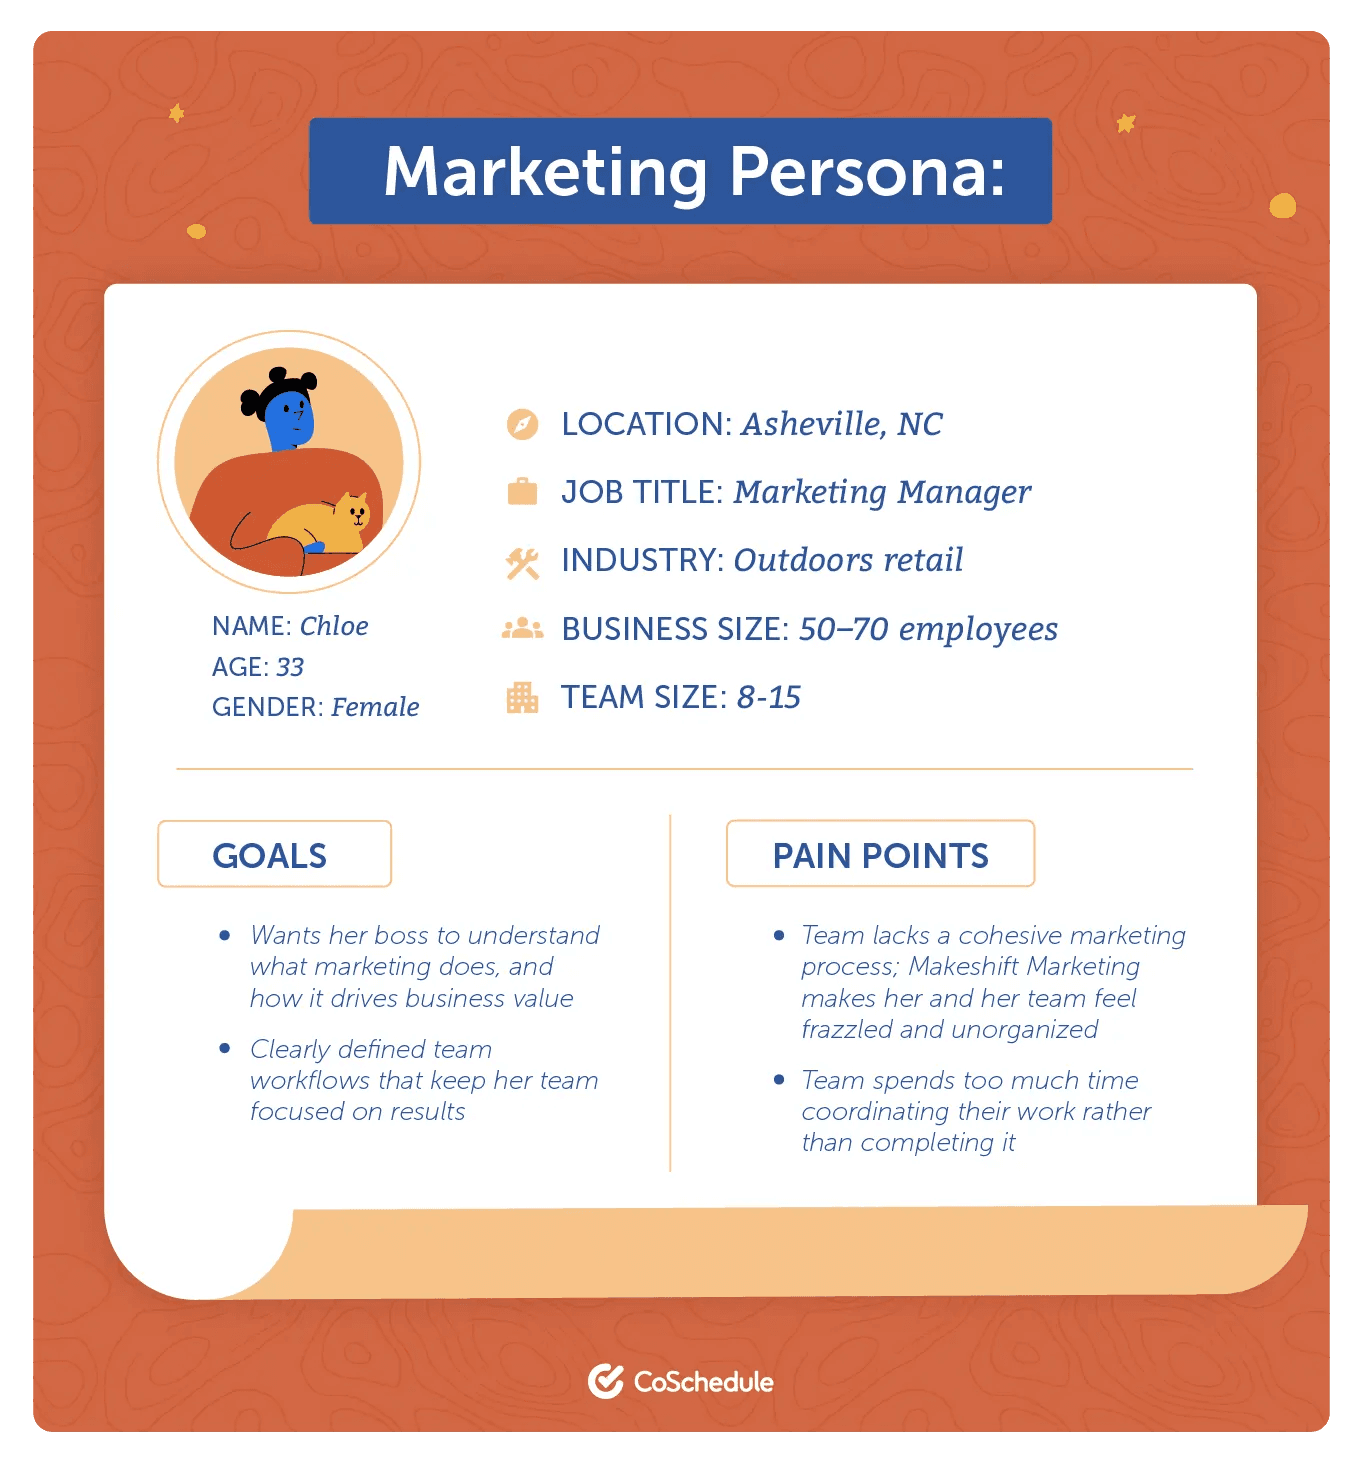 Marketing Persona employee profile